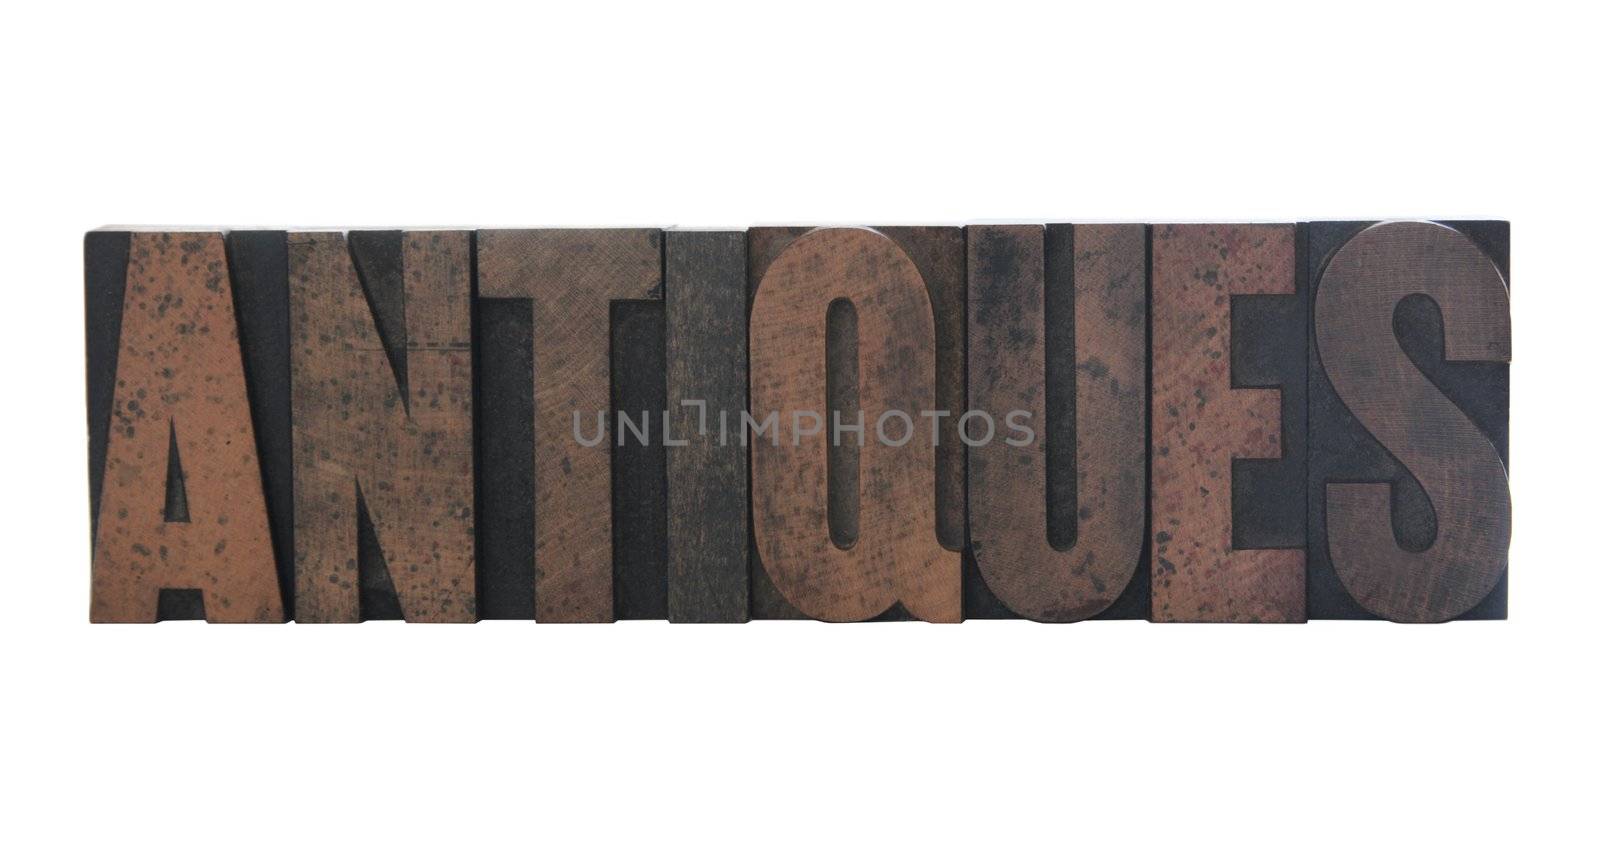 antiques in letterpress wood type by nebari